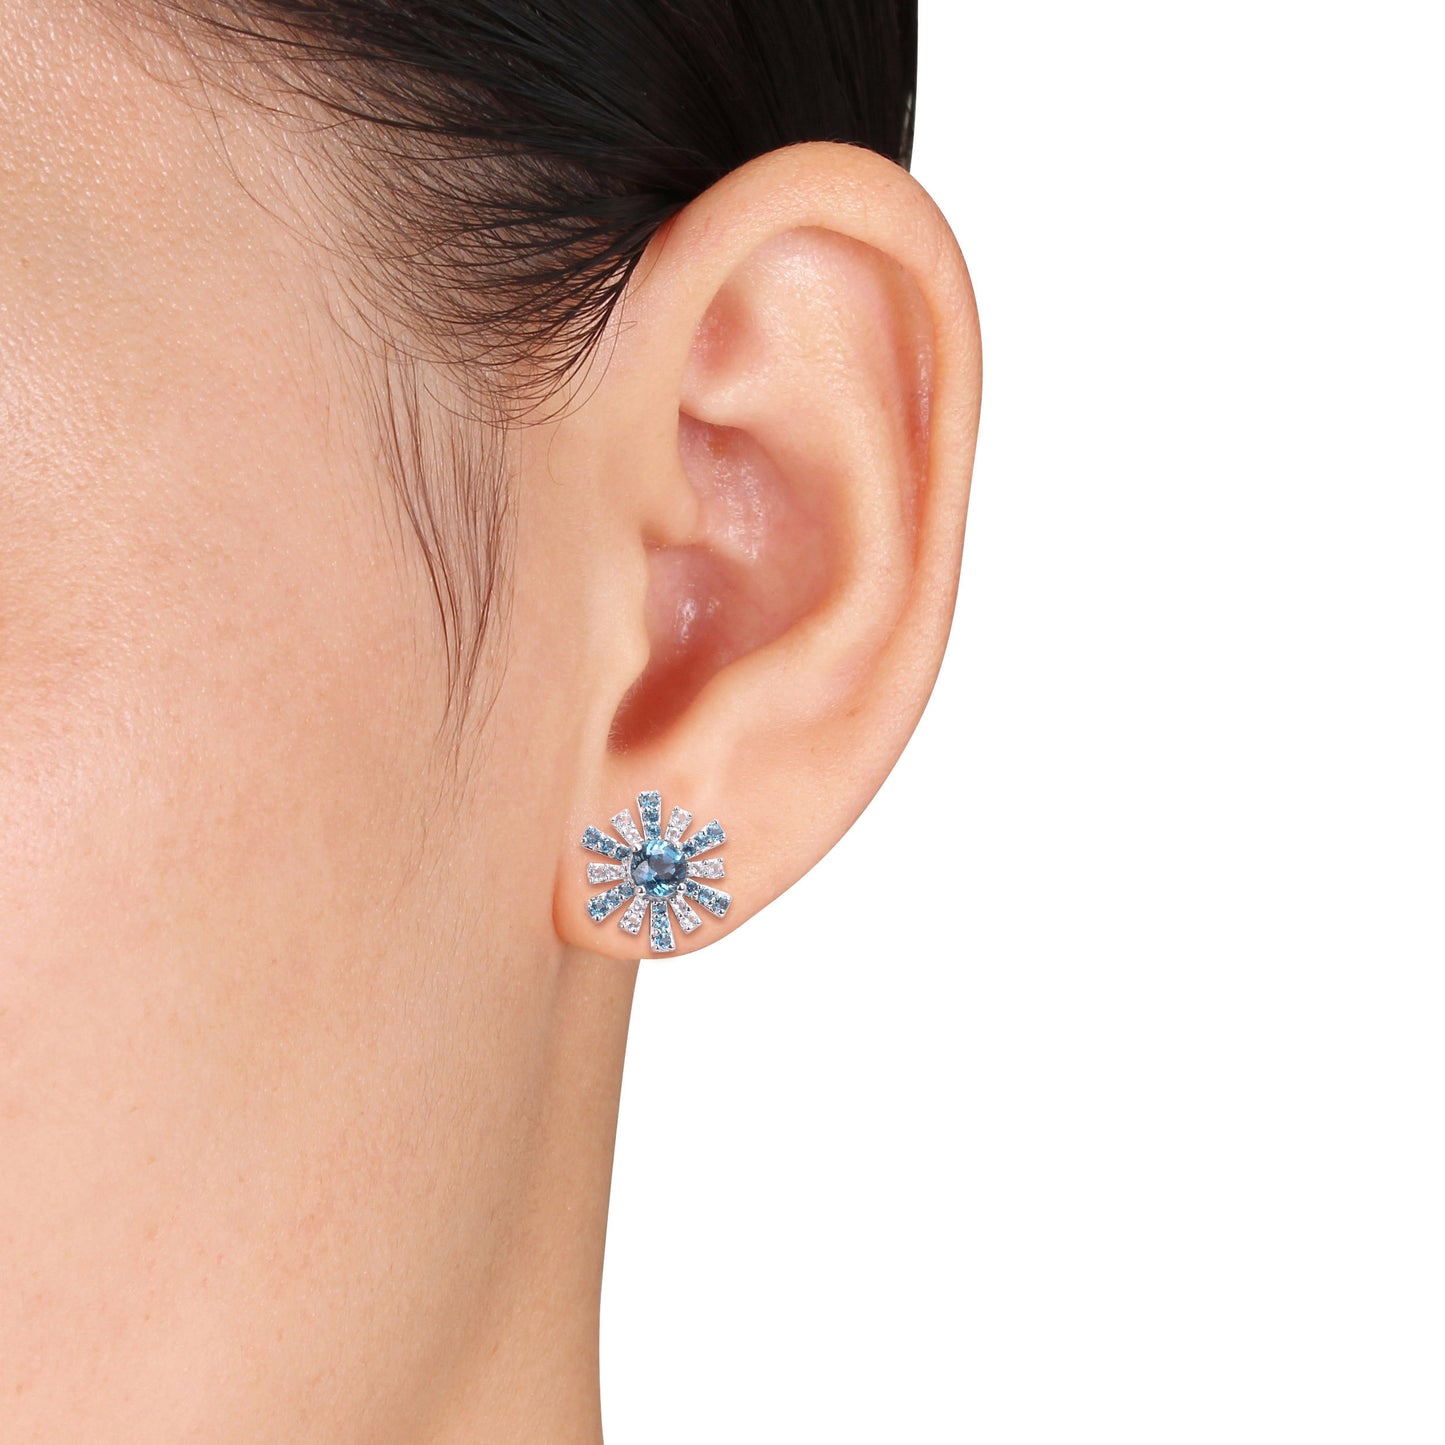 2 1/10ct Blue & White Starburst Earrings in Sterling Silver